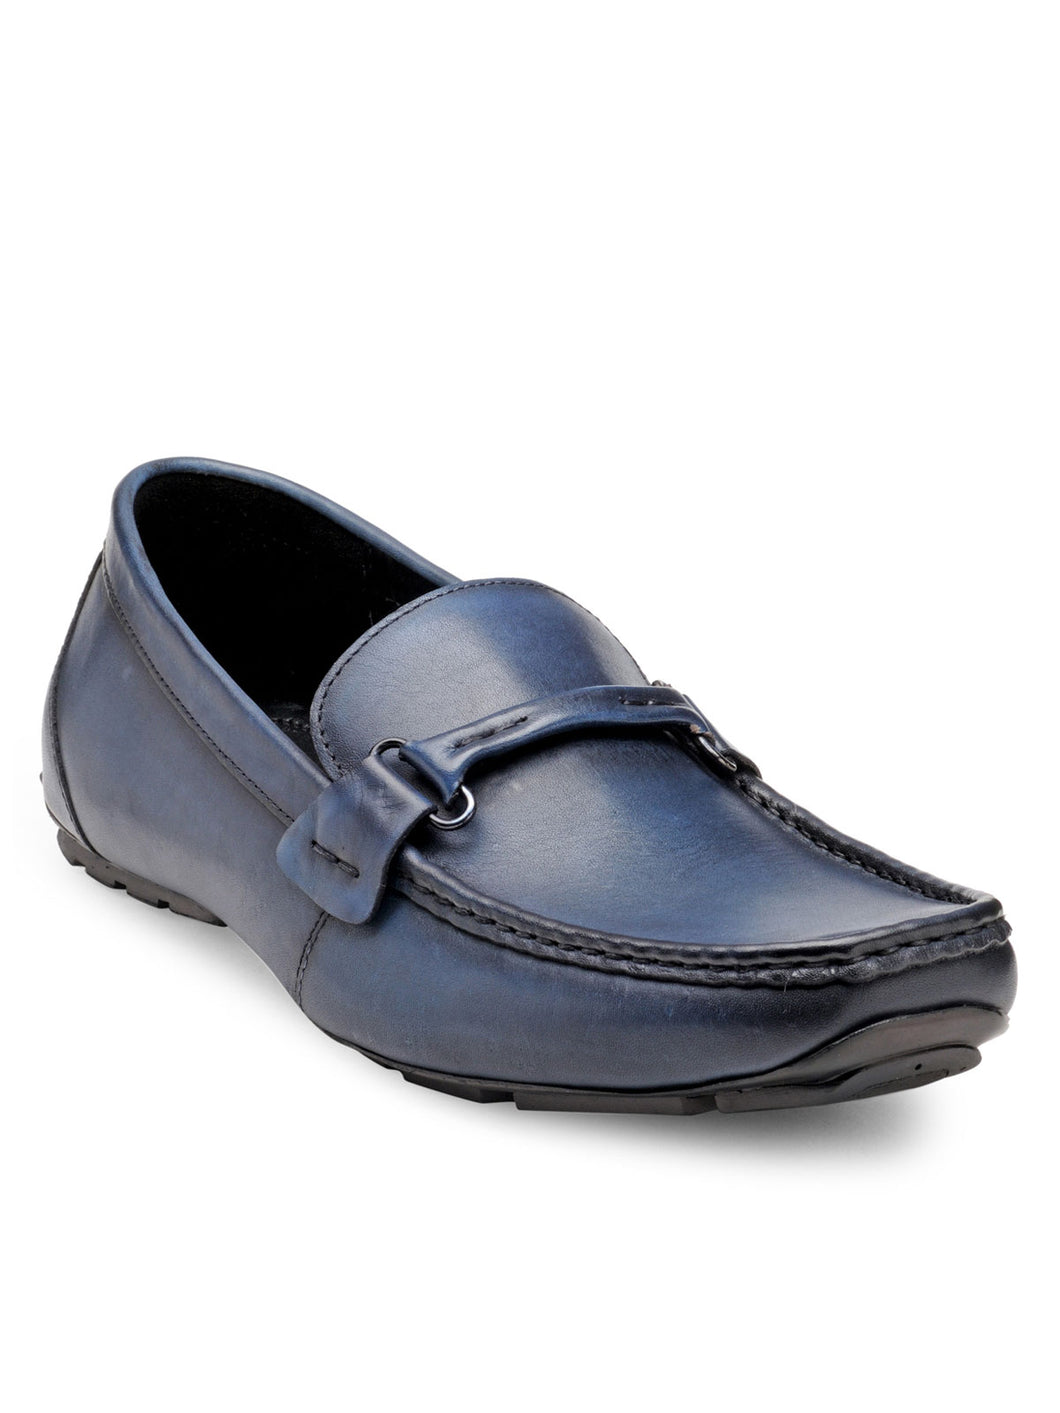 Teakwood Leather Men's Navy Blue Slip-ons Shoes